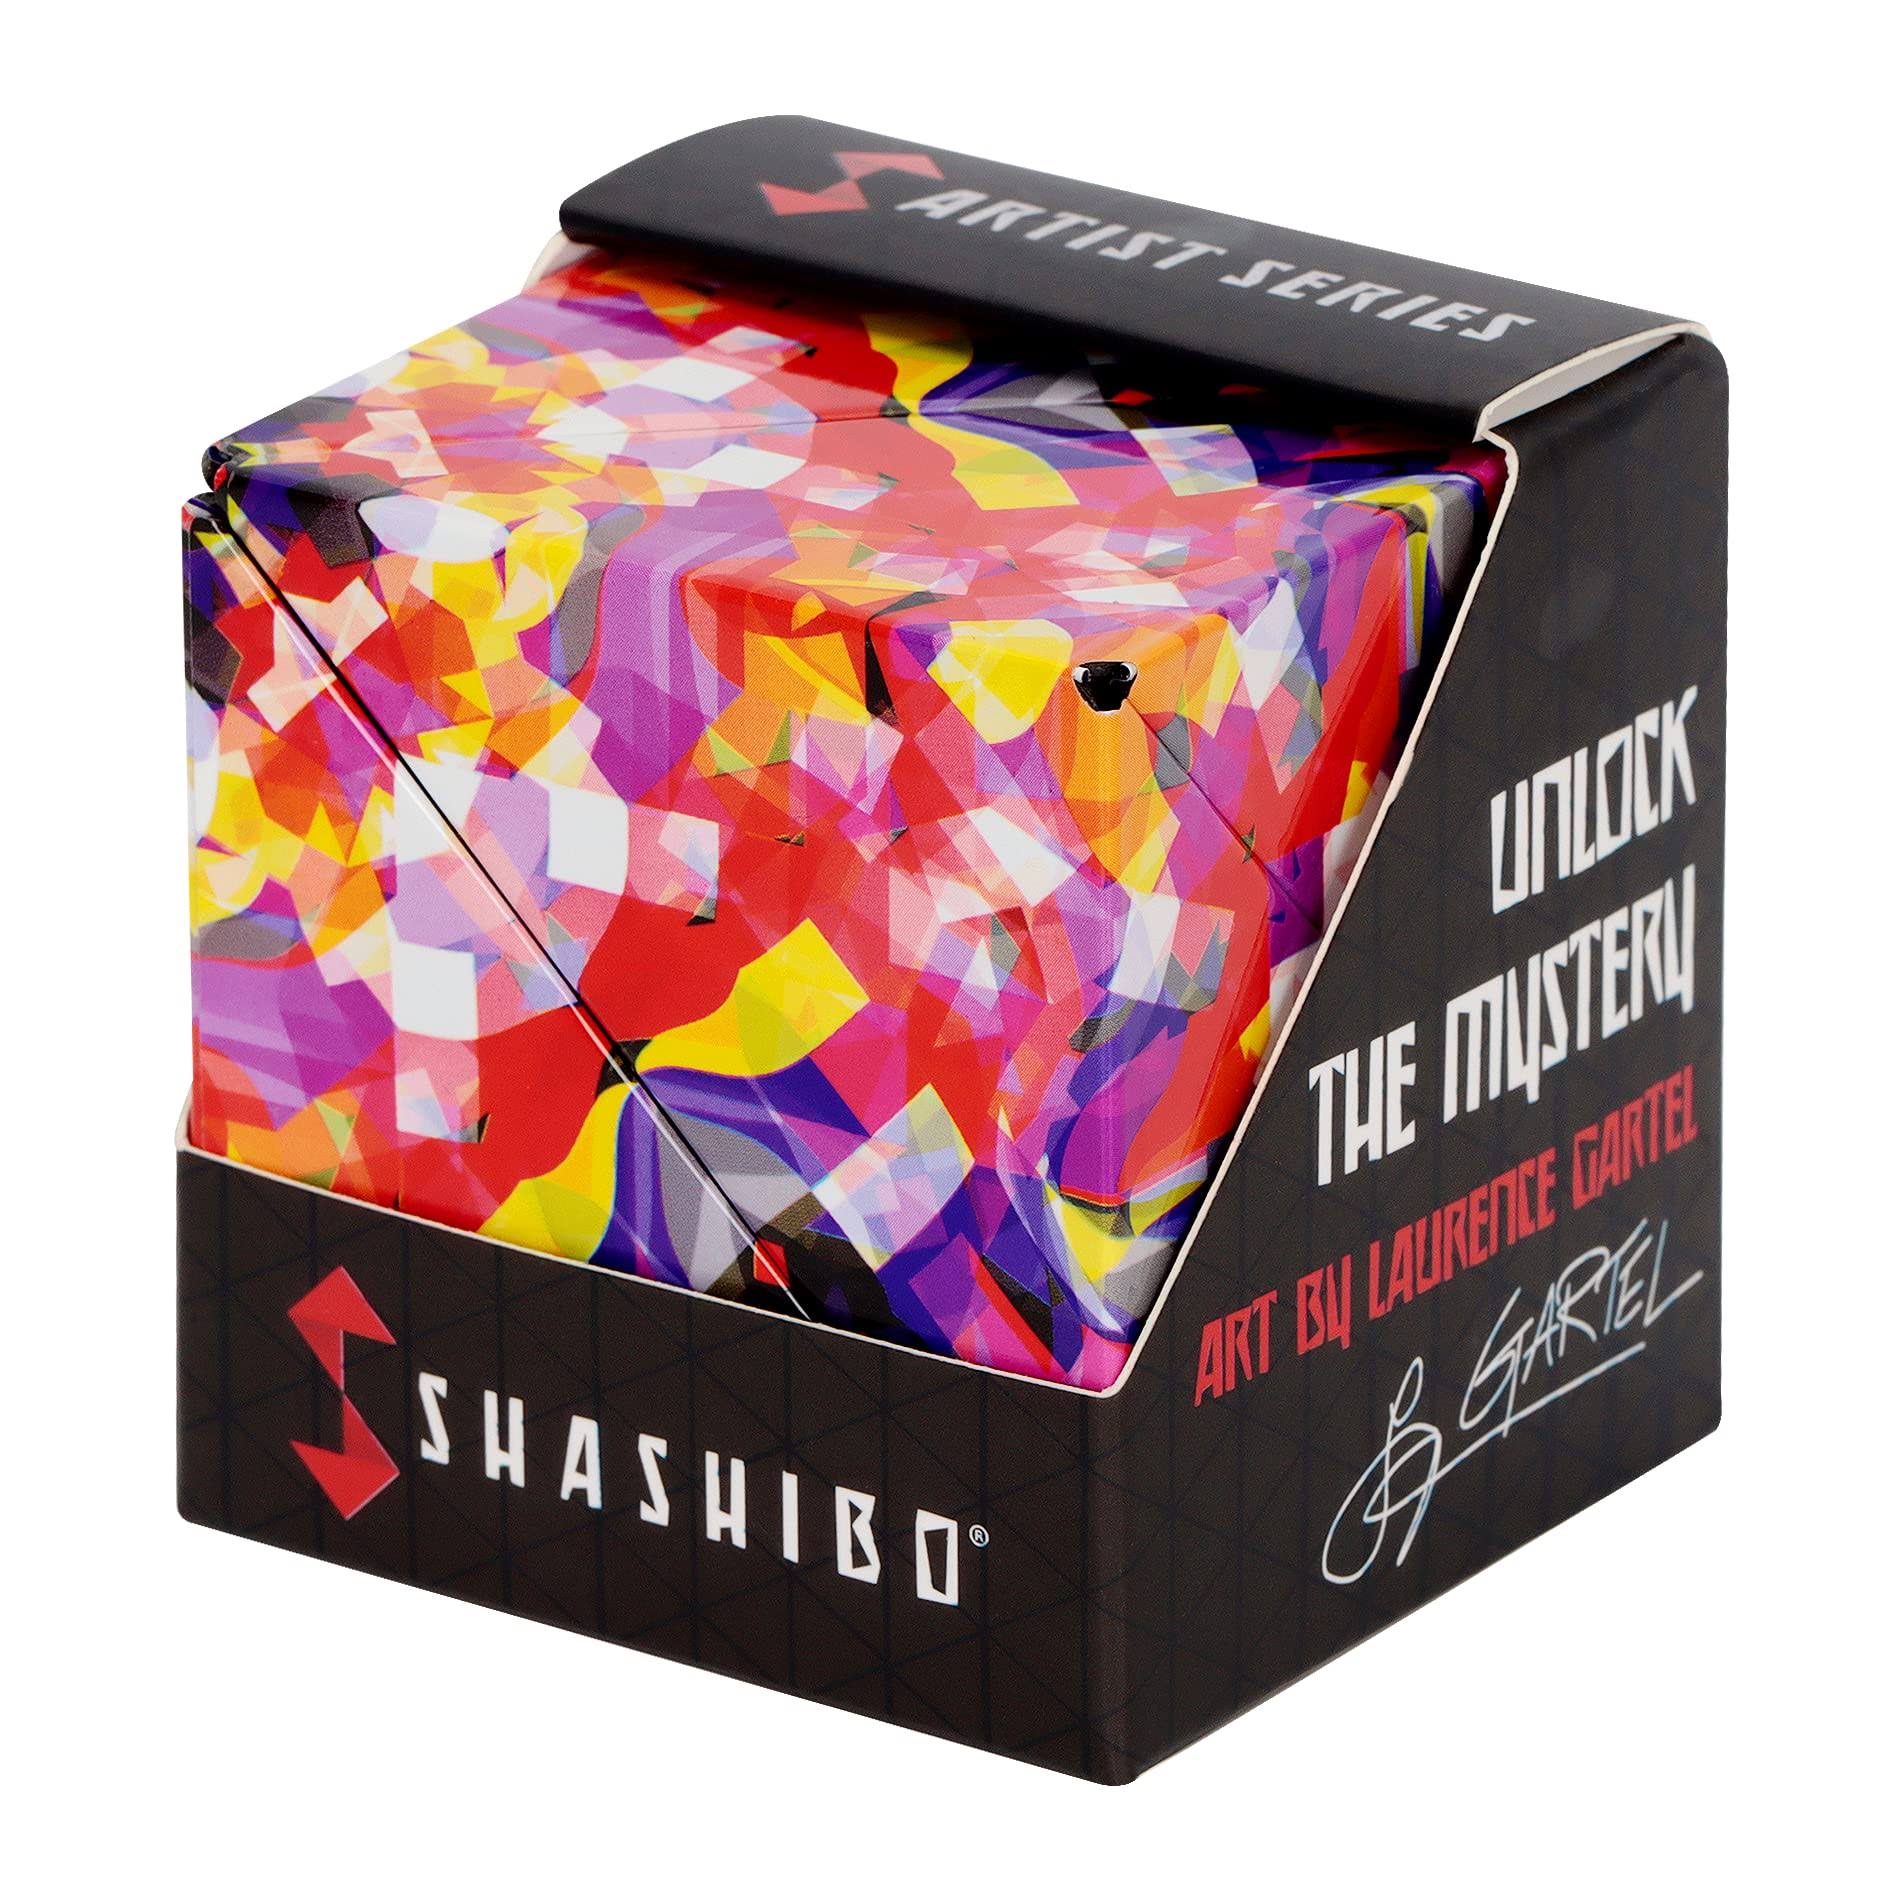 SHASHIBO Shape Shifting Box - Award-Winning, Patented Sensory Cube w/ 36 Rare Earth Magnets - Extraordinary 3d Magic Cube – Sensory Toy Transforms